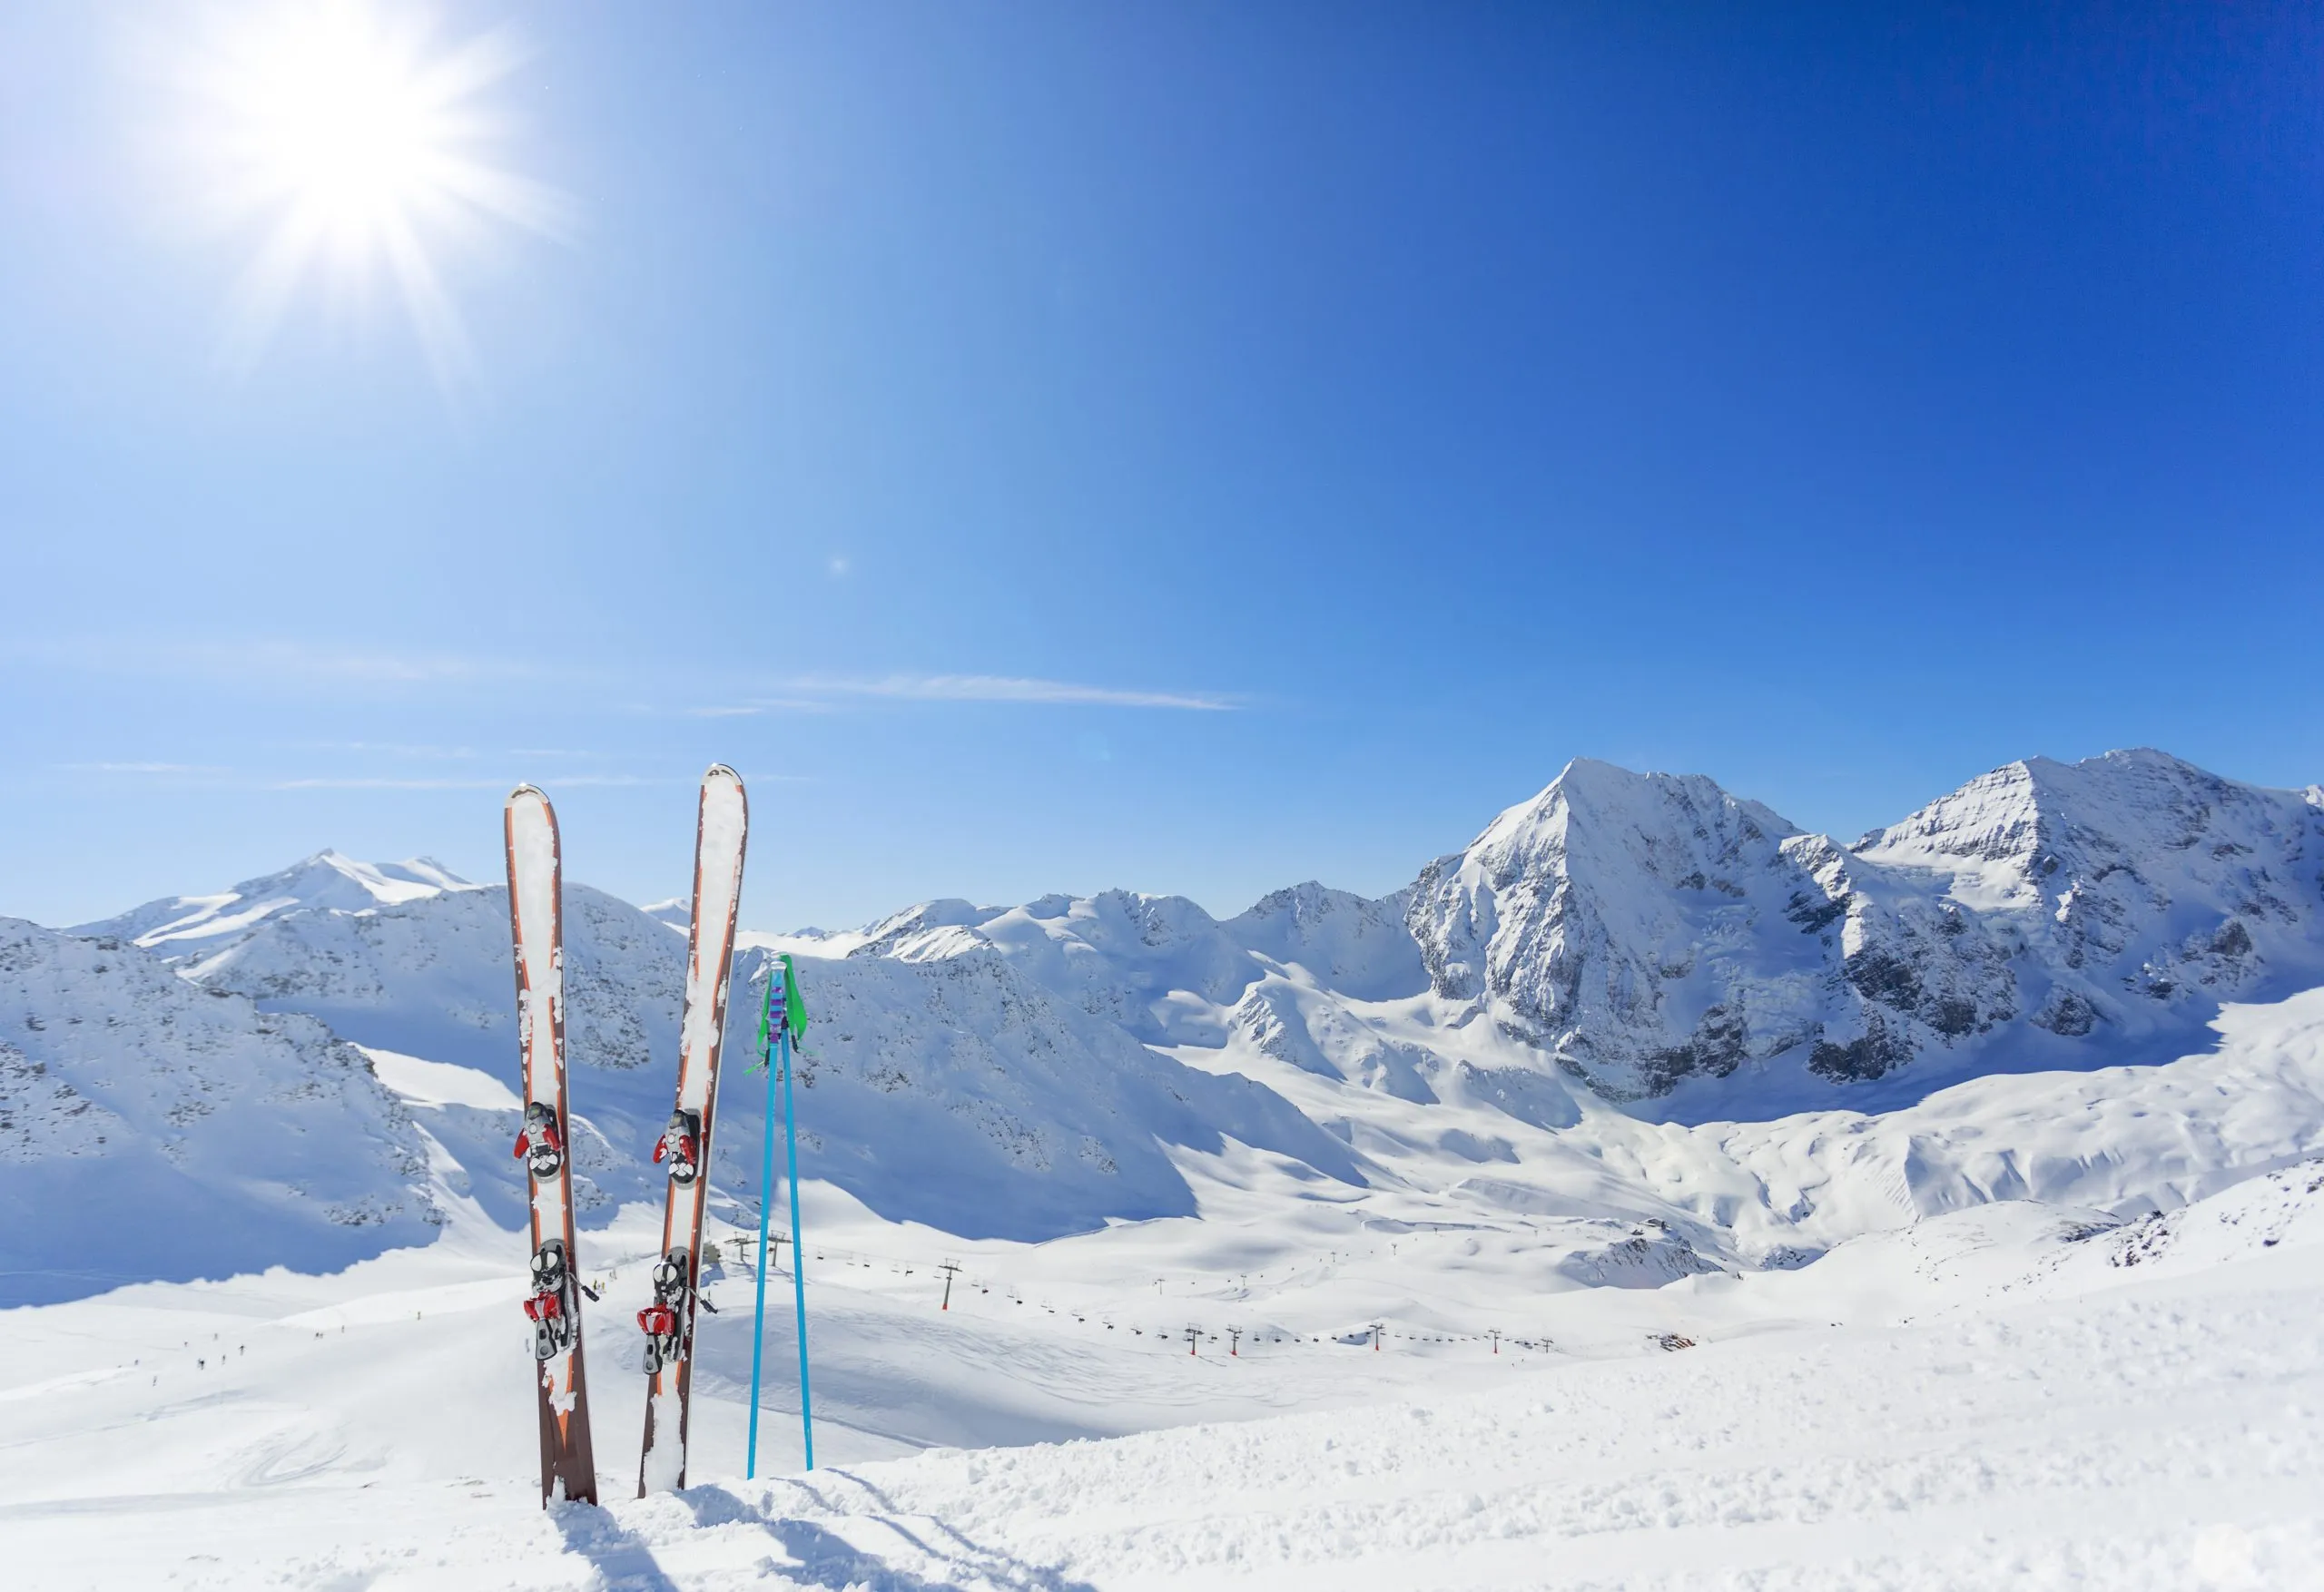 Skiing equipments on ski slope in italian Alps